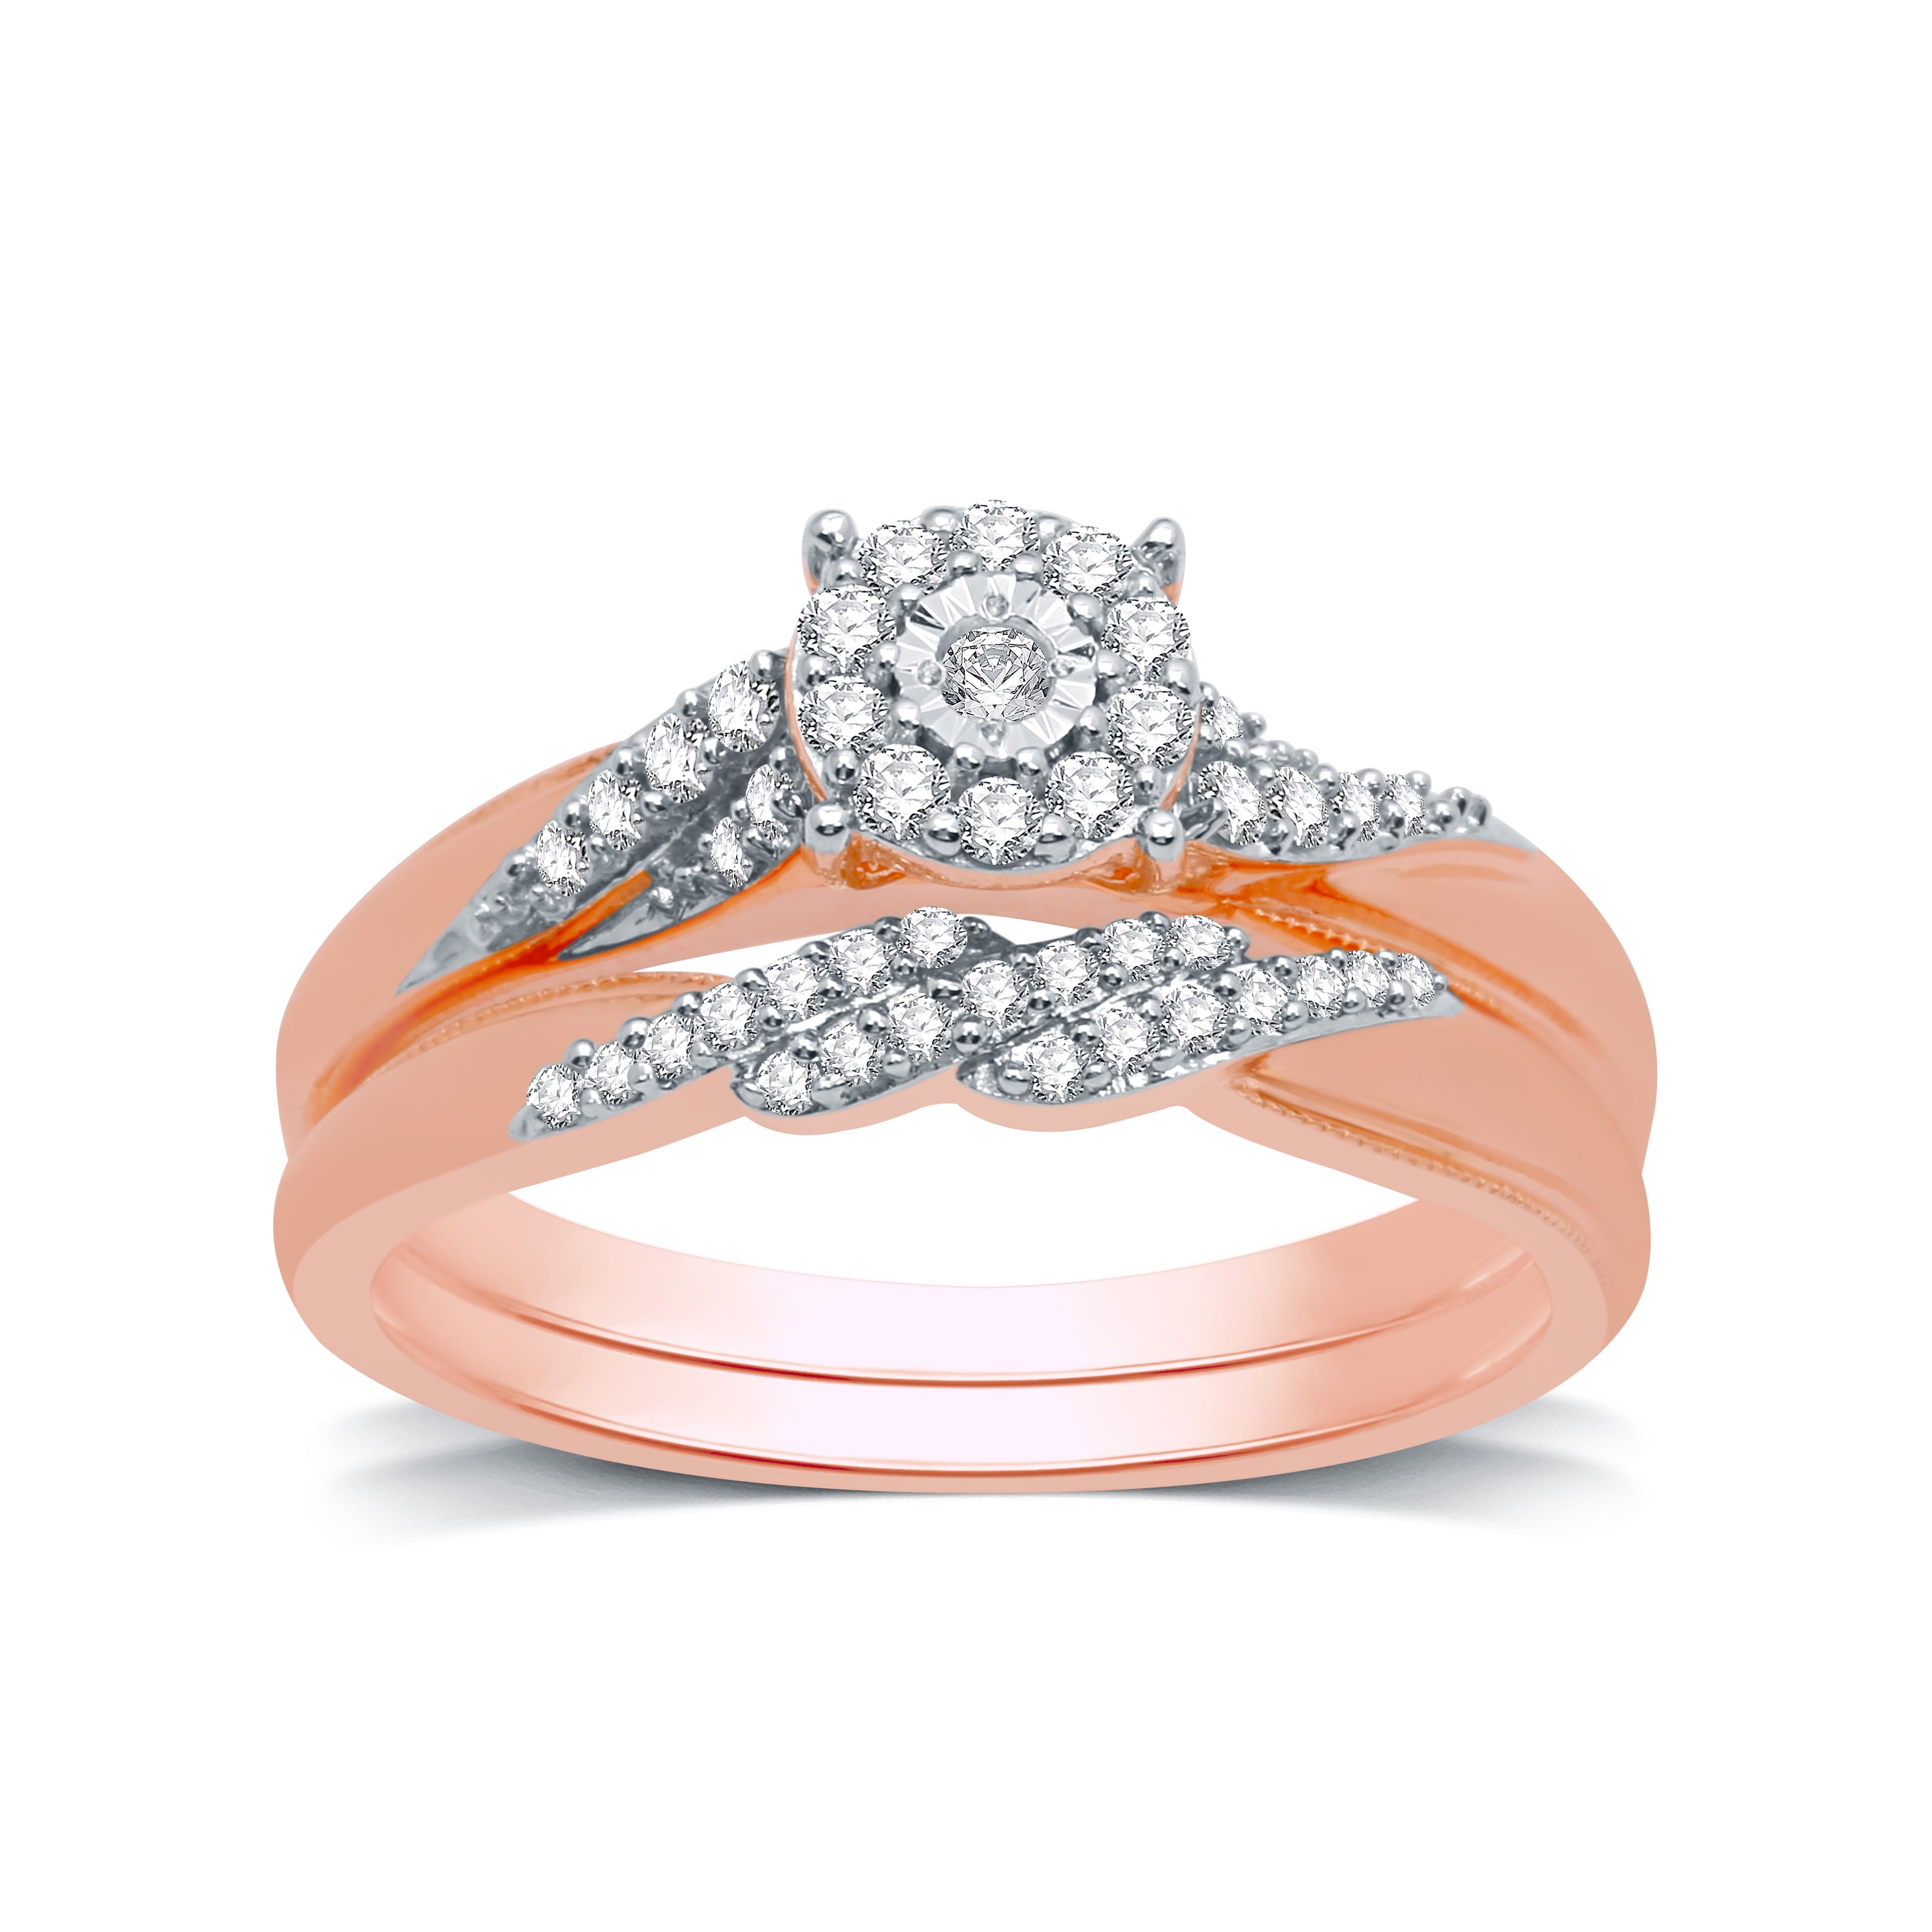 Details about   10k White Gold Round Diamond Rose-tone Rope Bridal Wedding Engagement Ring 